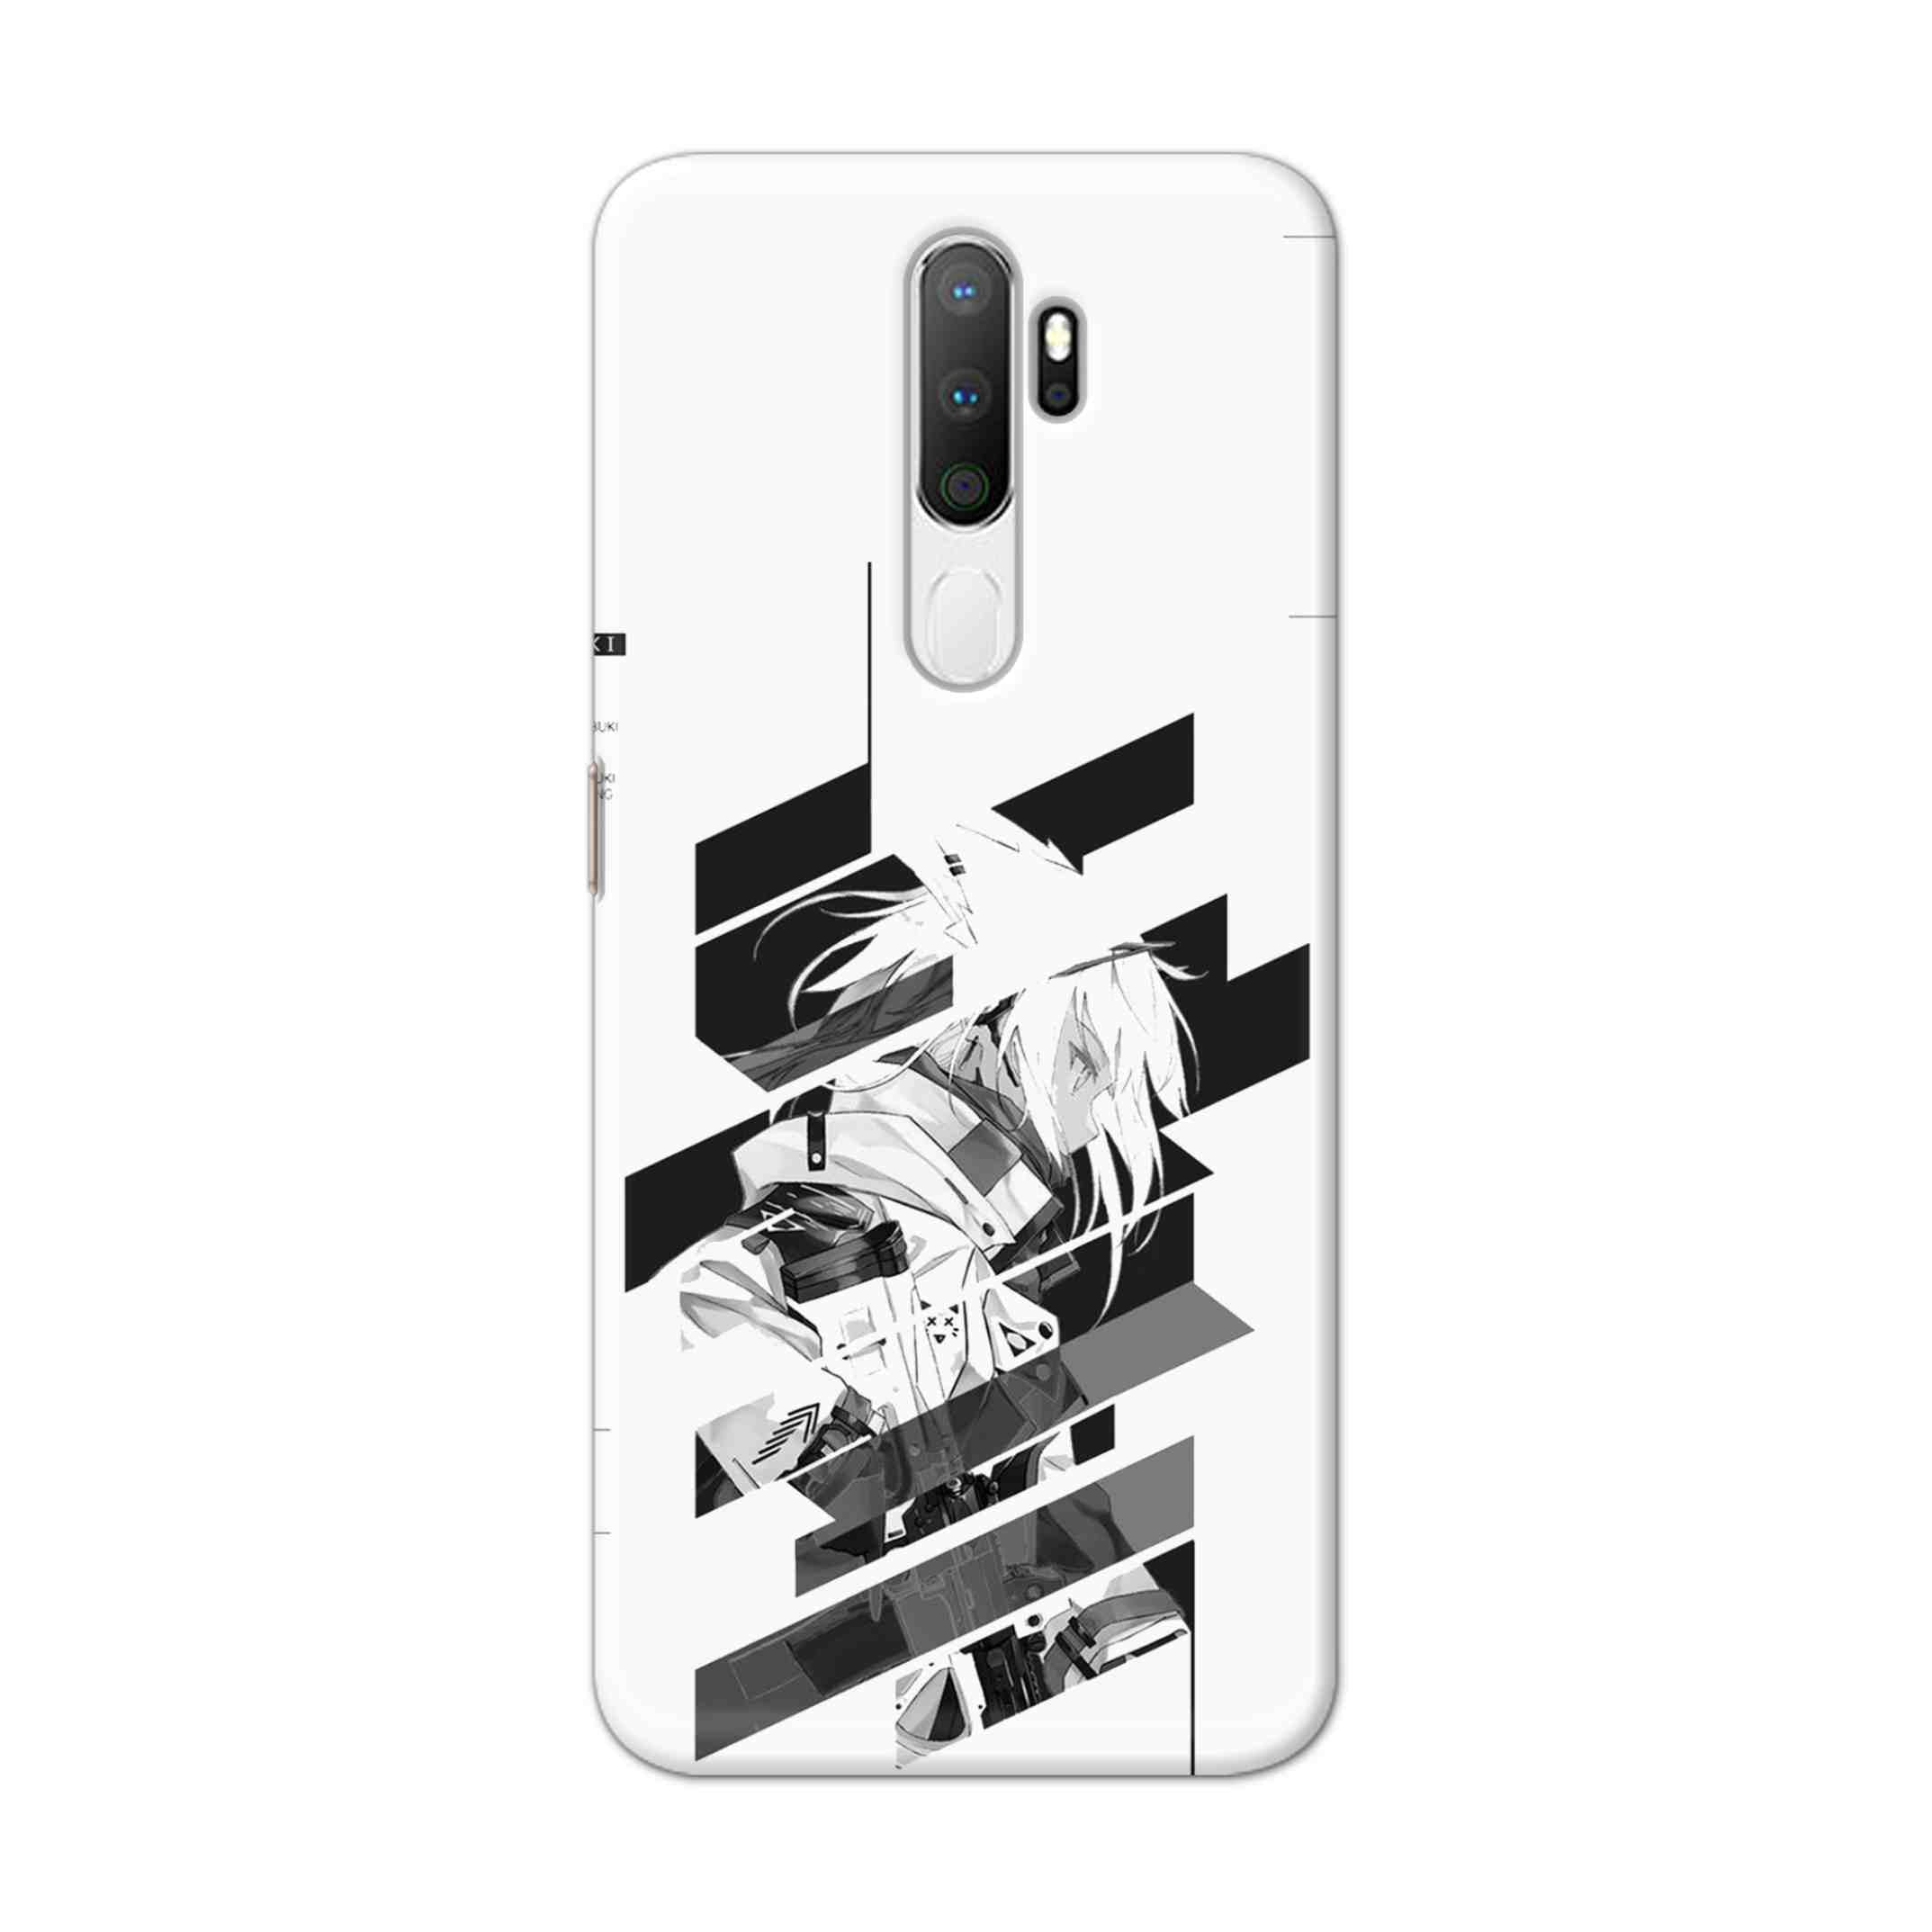 Buy Fubuki Hard Back Mobile Phone Case Cover For Oppo A5 (2020) Online